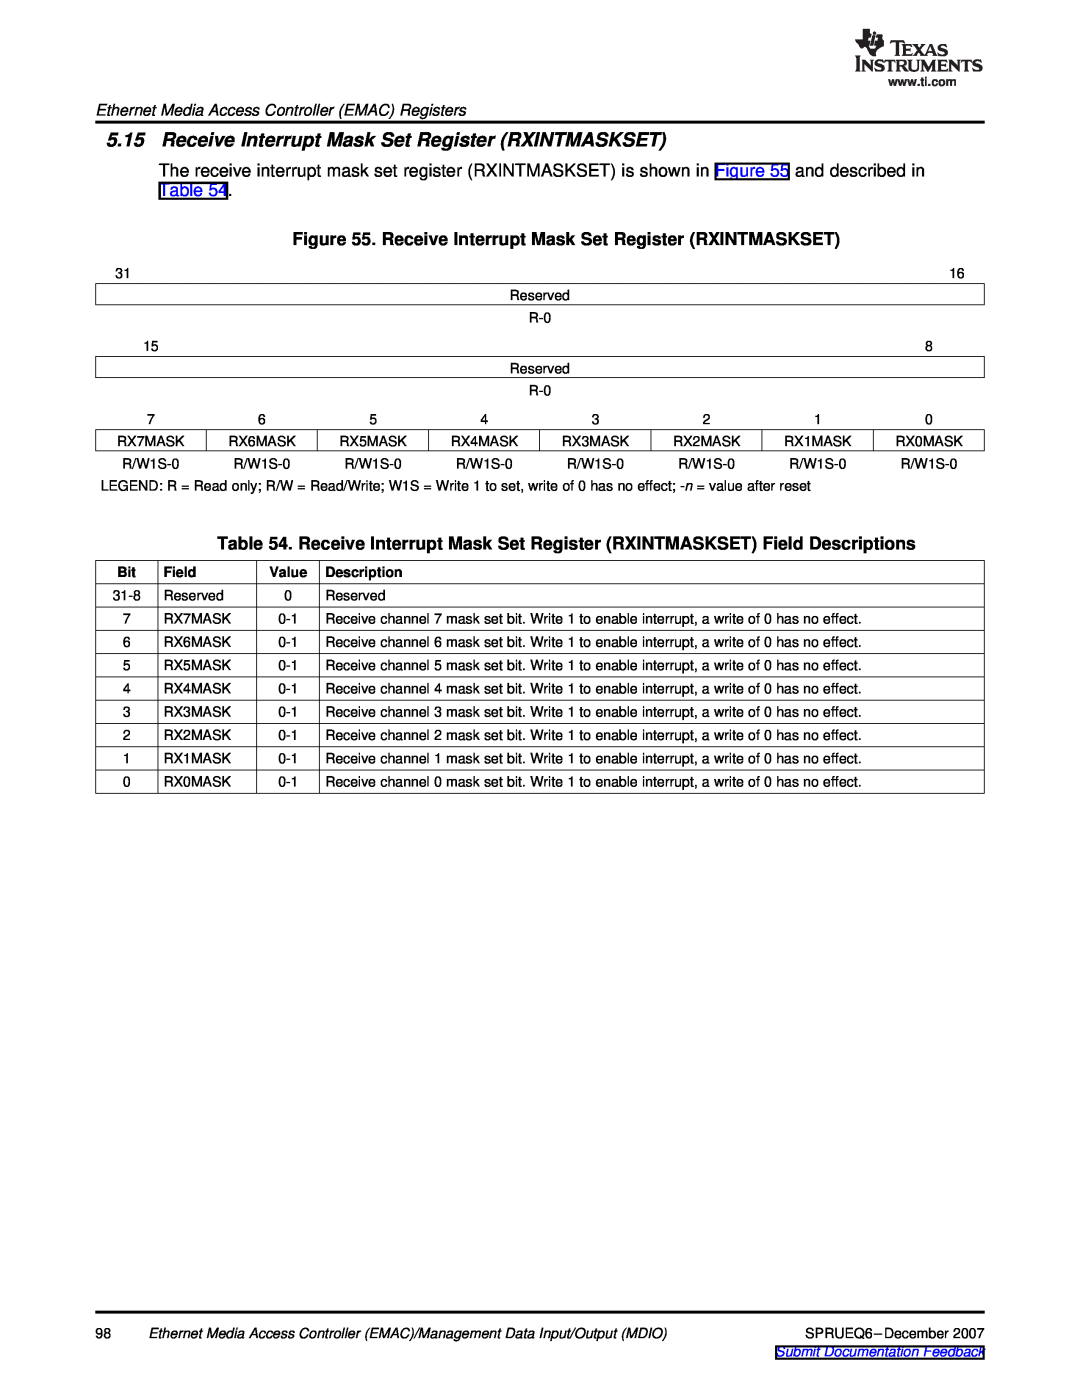 Texas Instruments TMS320DM646x manual Receive Interrupt Mask Set Register RXINTMASKSET, Field, Value, Description 